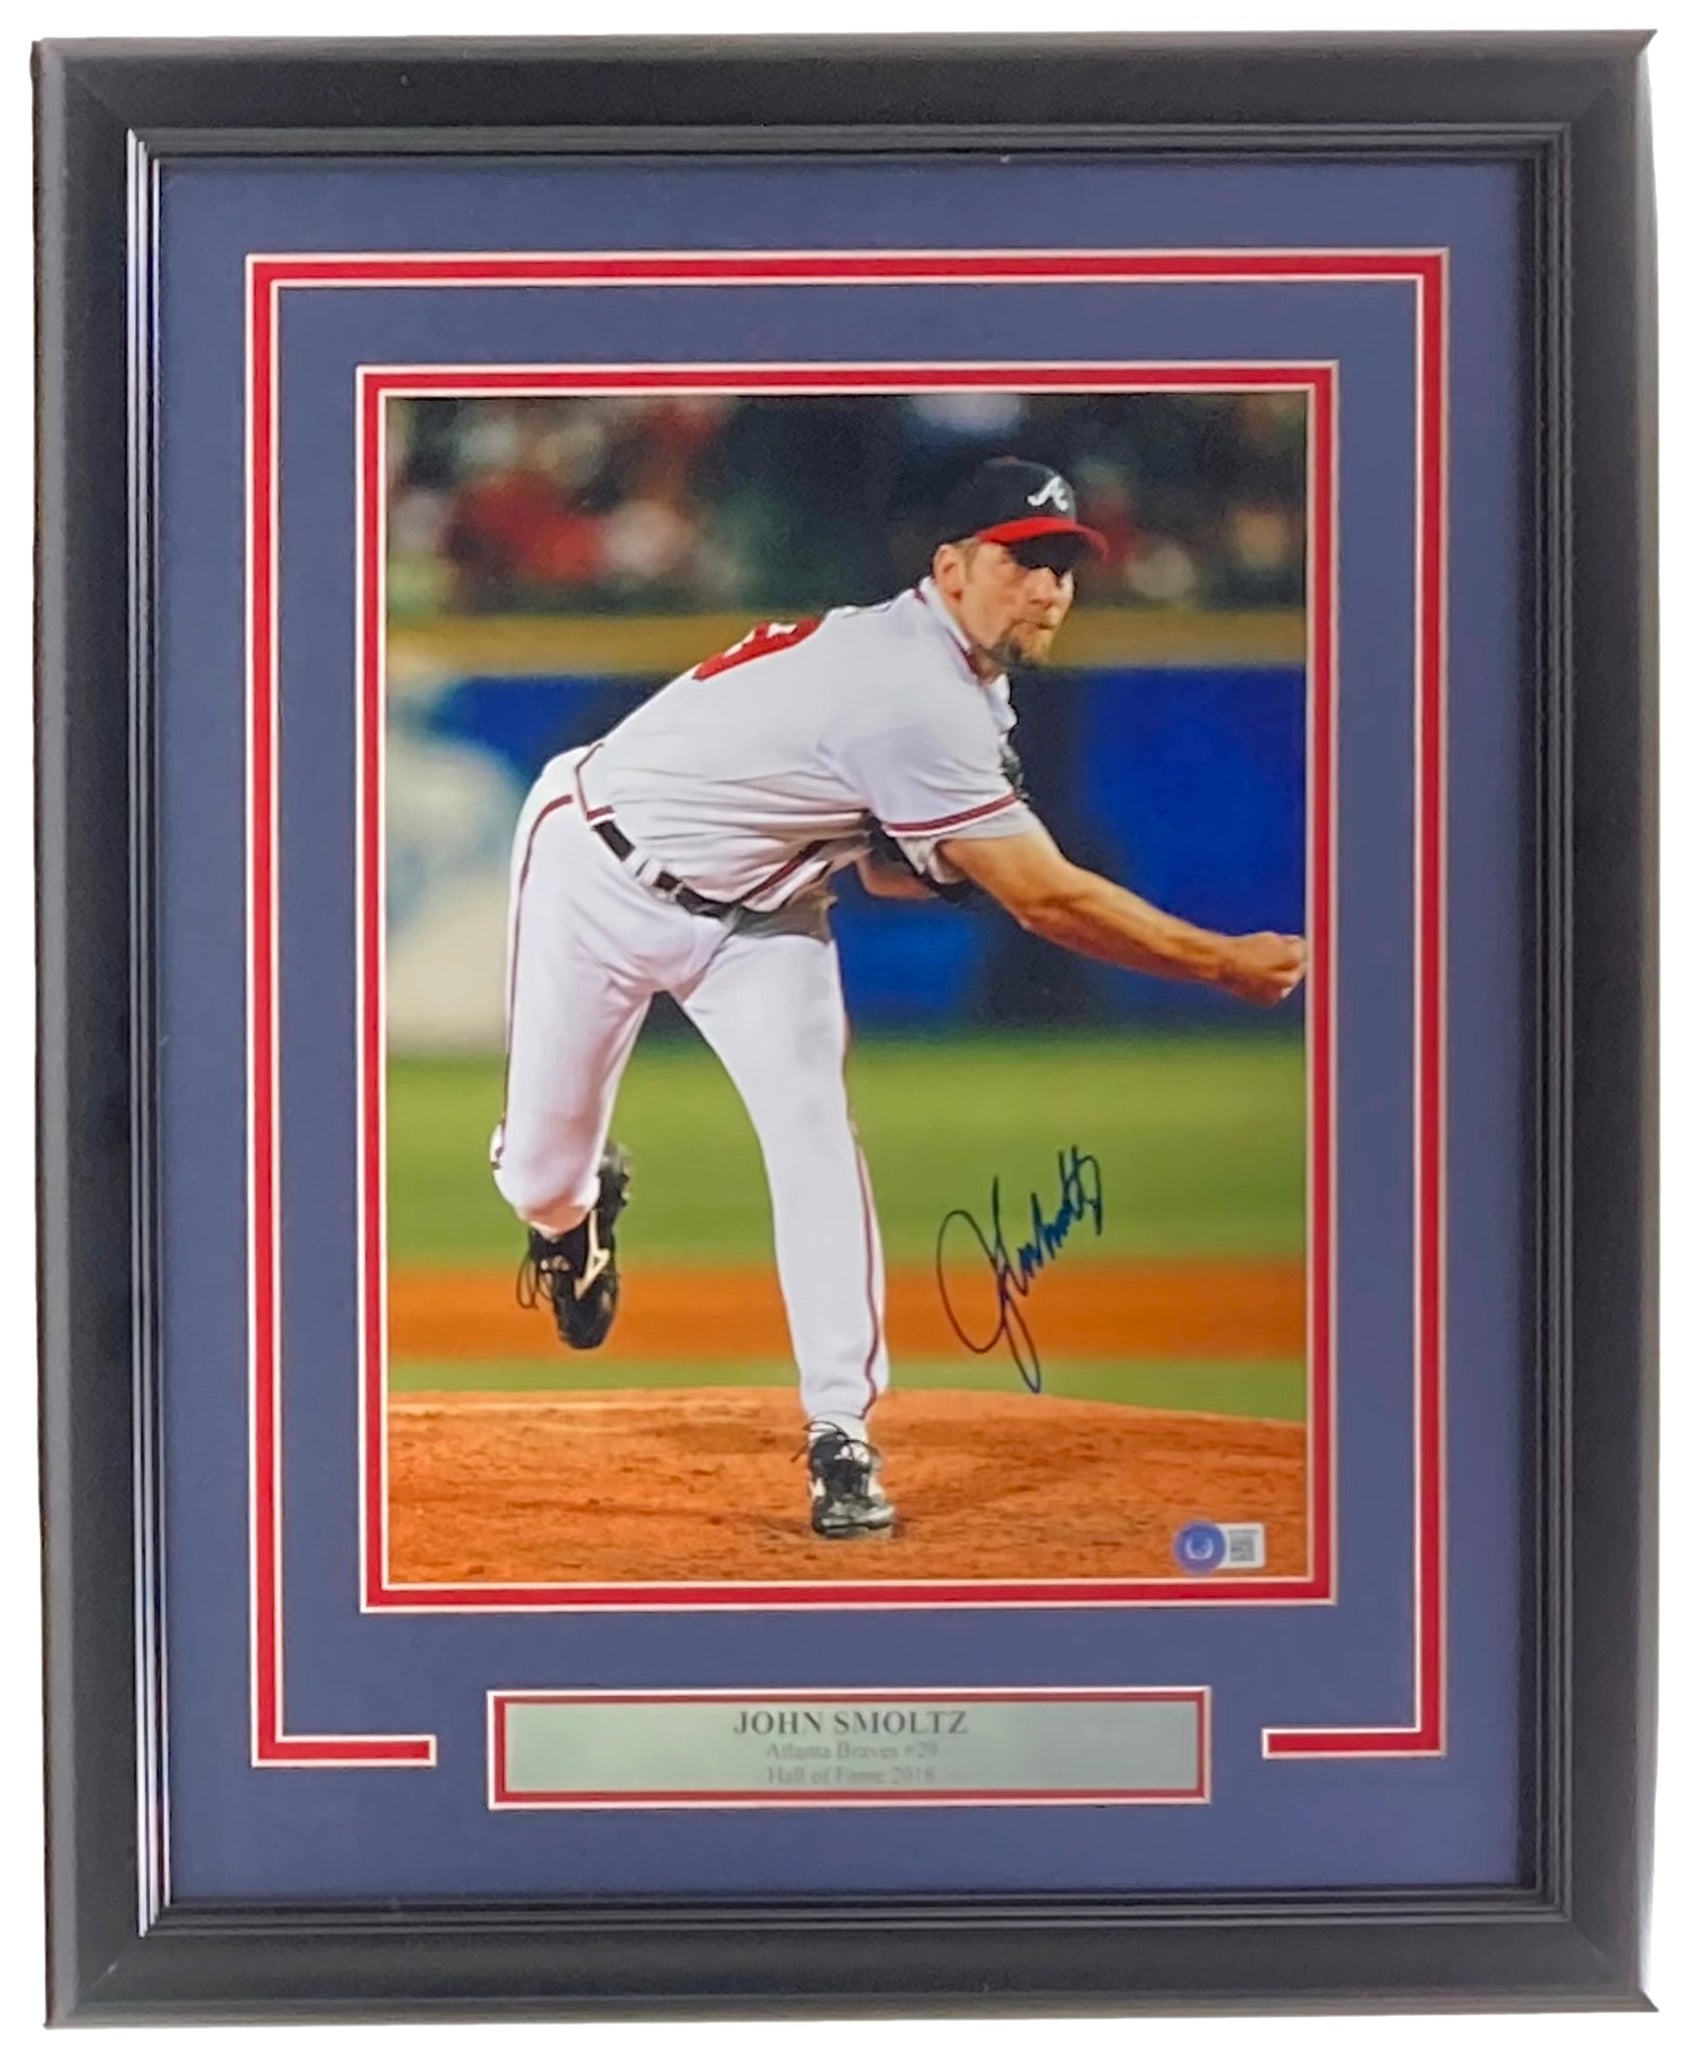 Framed Autographed/Signed Ronald Acuna Jr. 33x42 Atlanta Red Baseball Jersey  JSA COA - Hall of Fame Sports Memorabilia